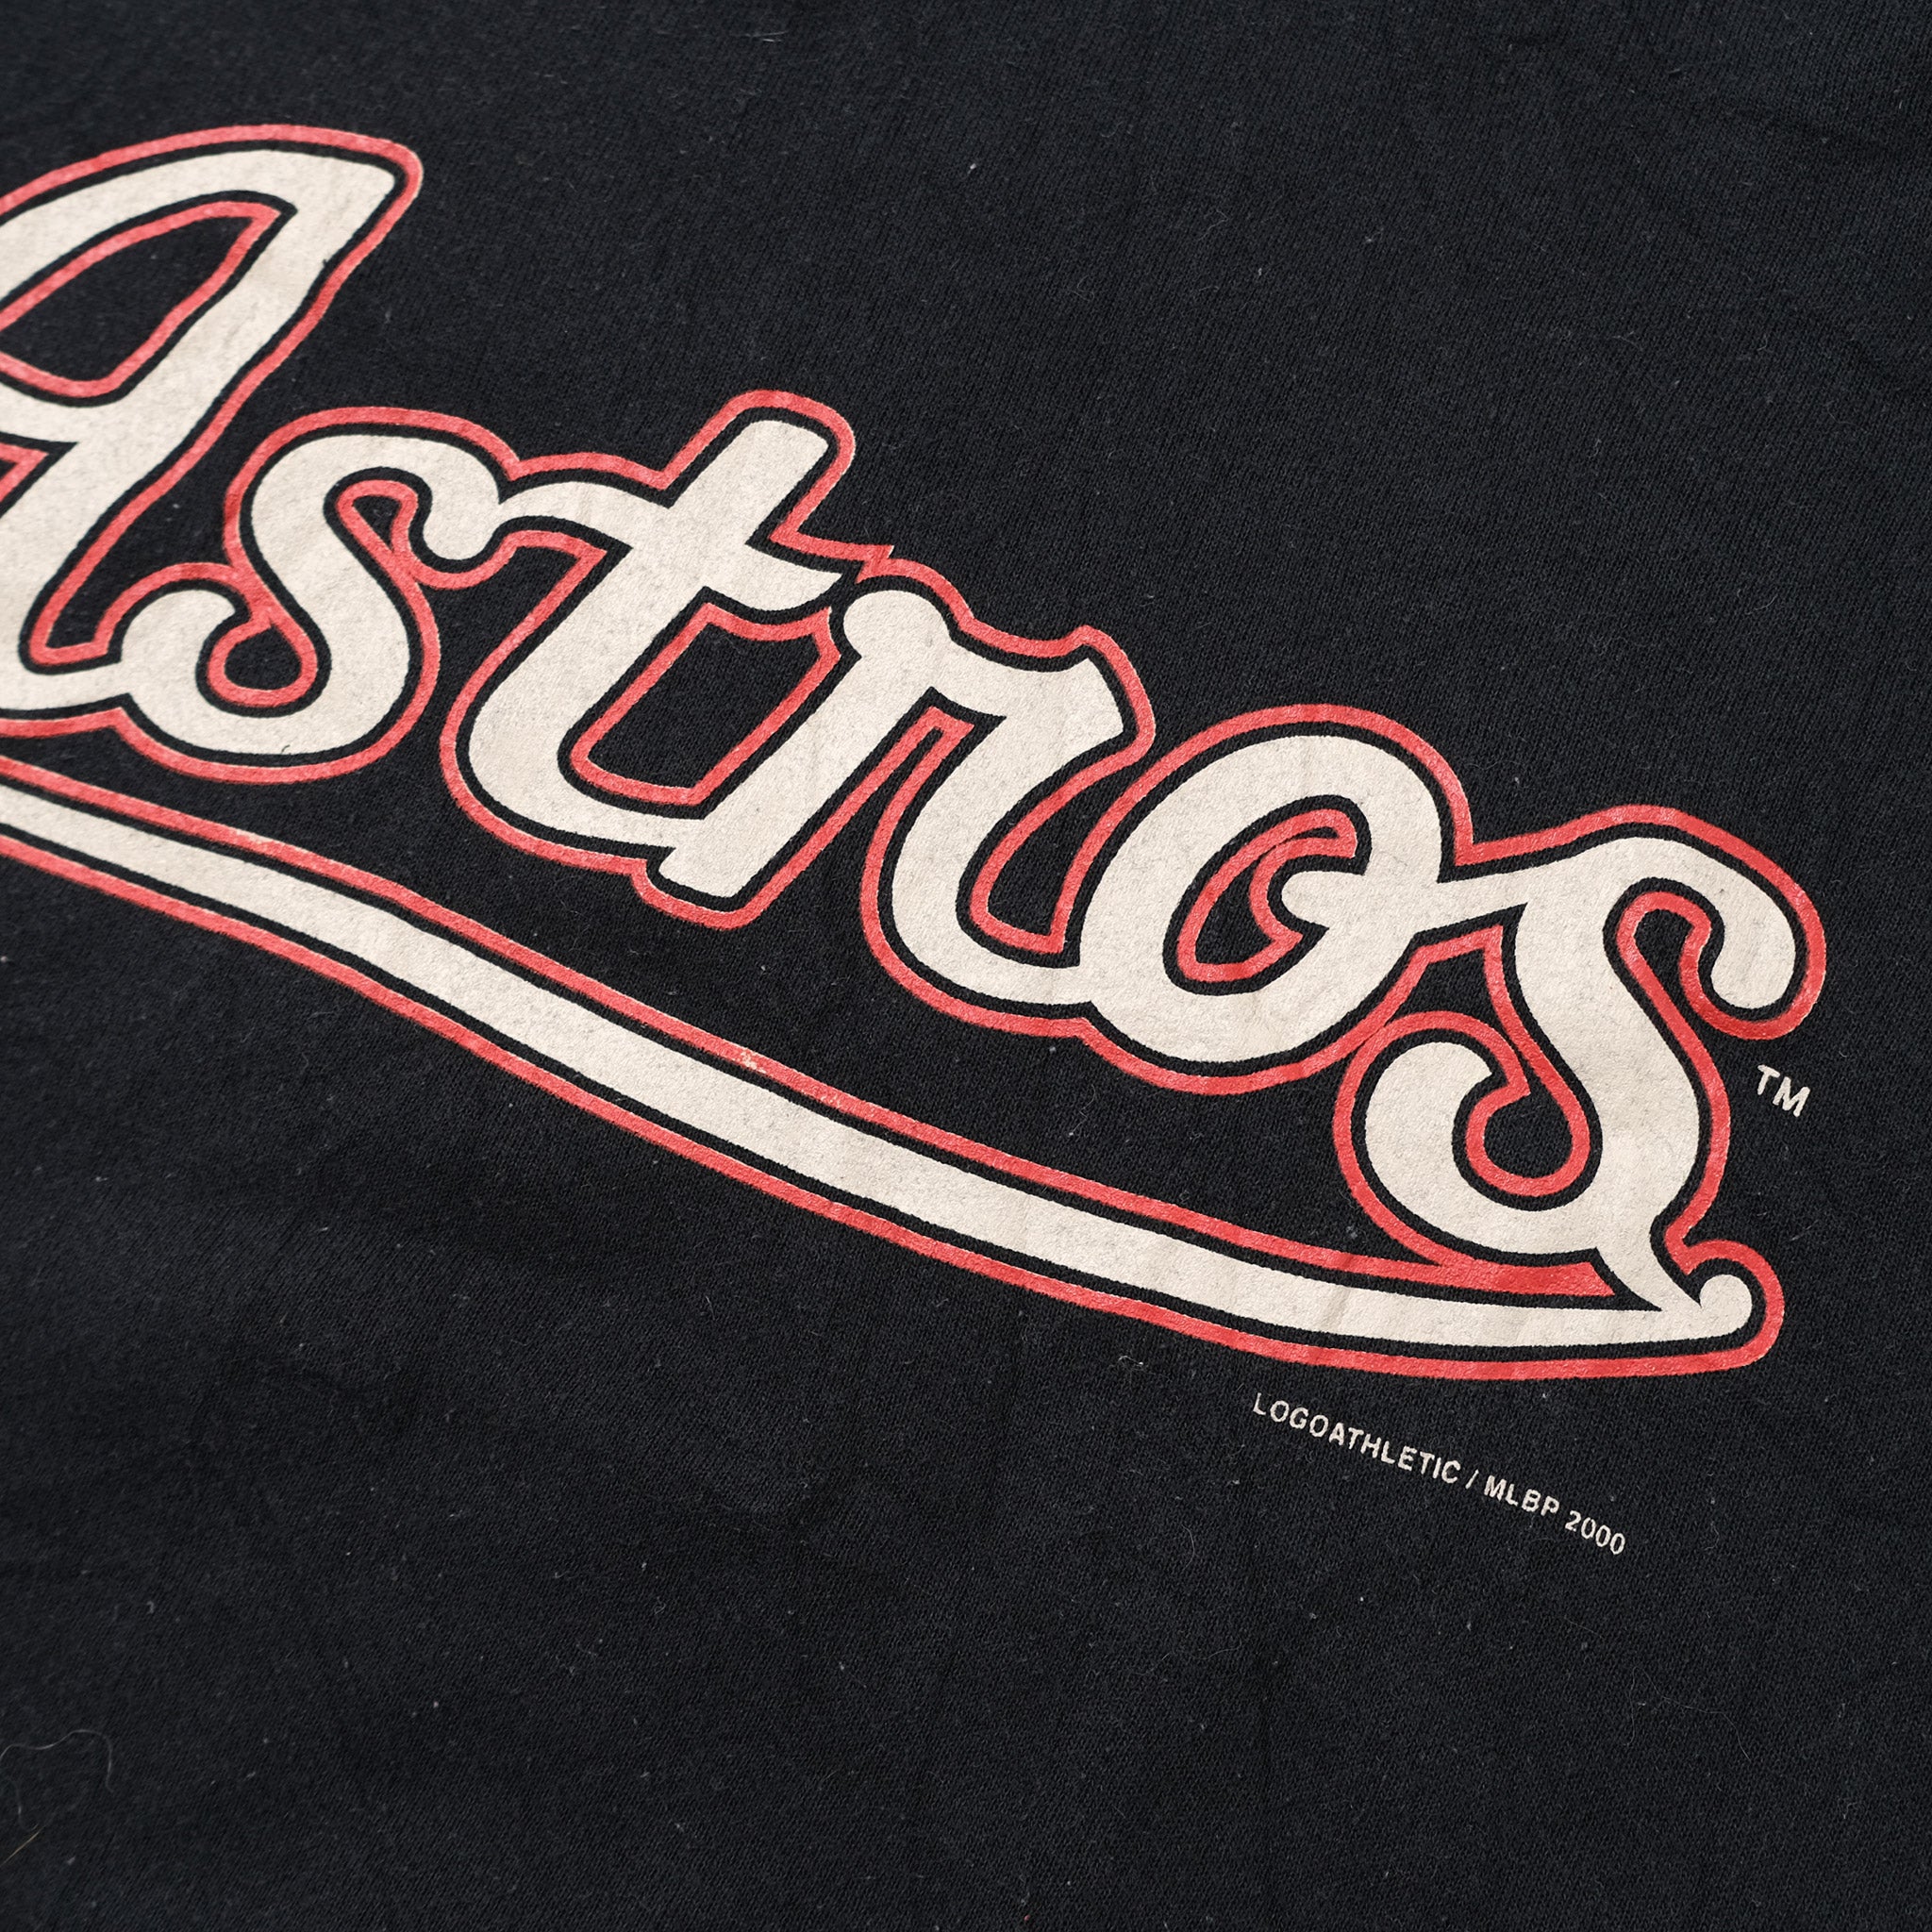 Vintage Sweater ID? : r/Astros